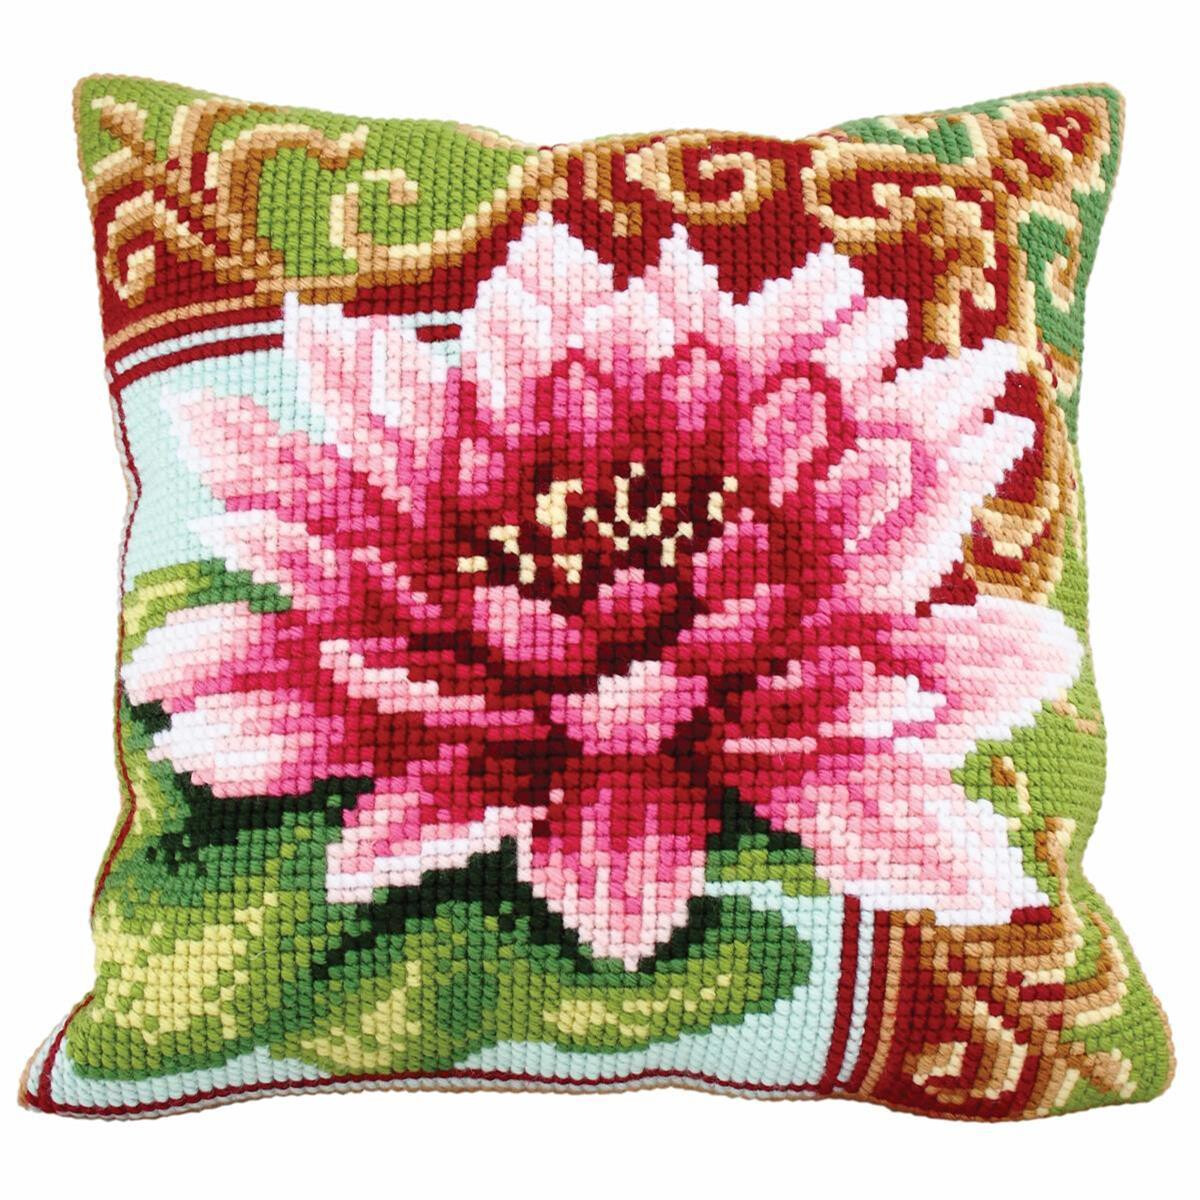 CdA stamped cross stitch kit cushion "Luxurious...